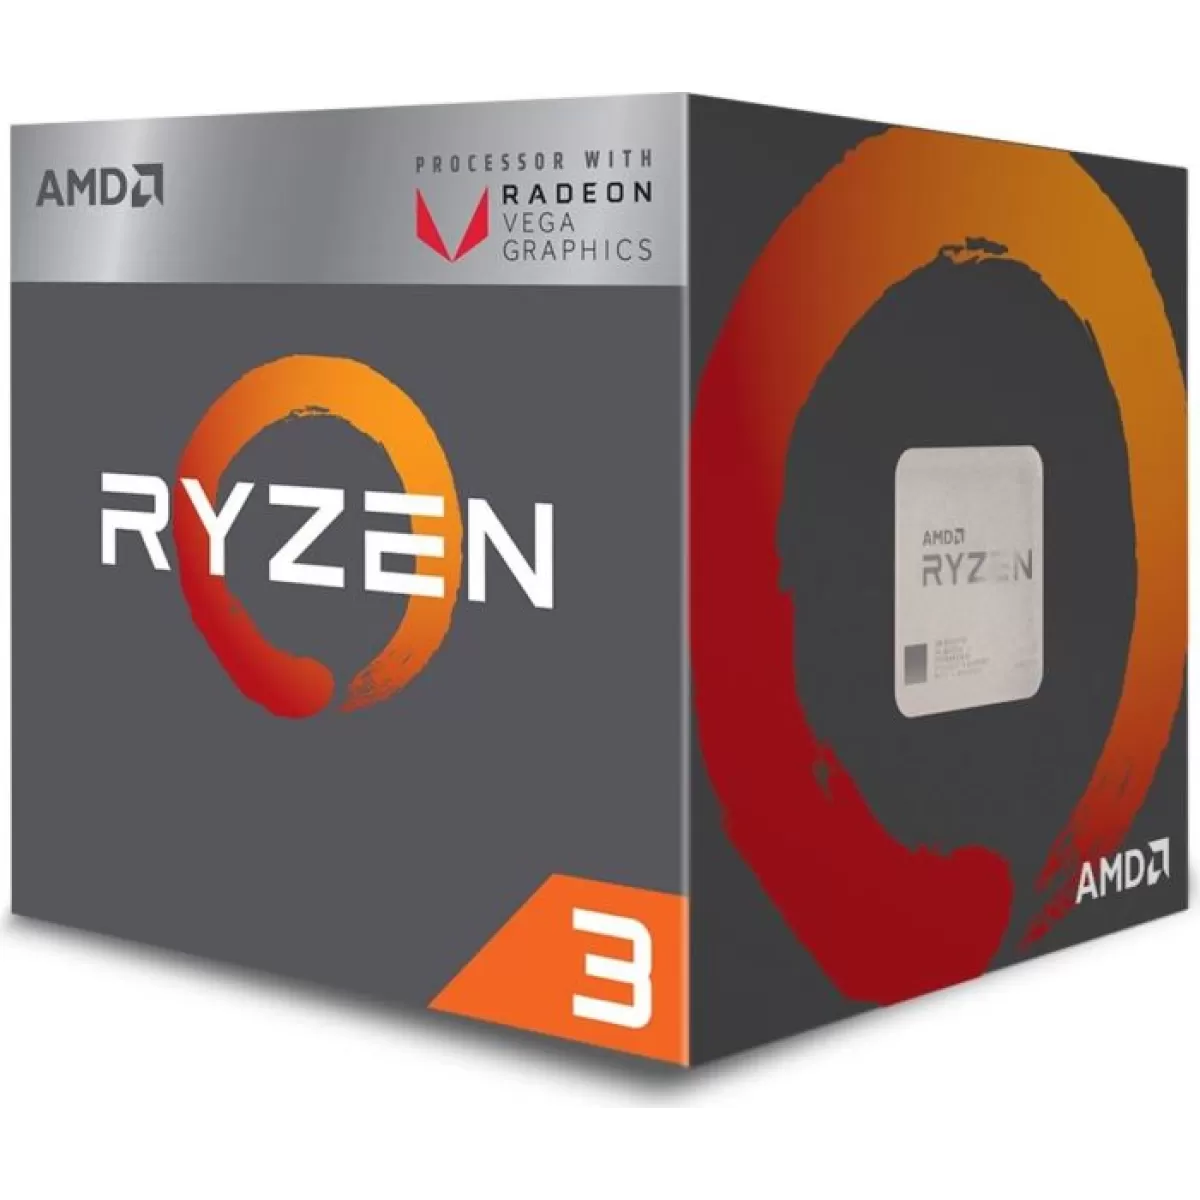 Процесор AMD RYZEN 3 2200G 3.5G W/VEGA 8